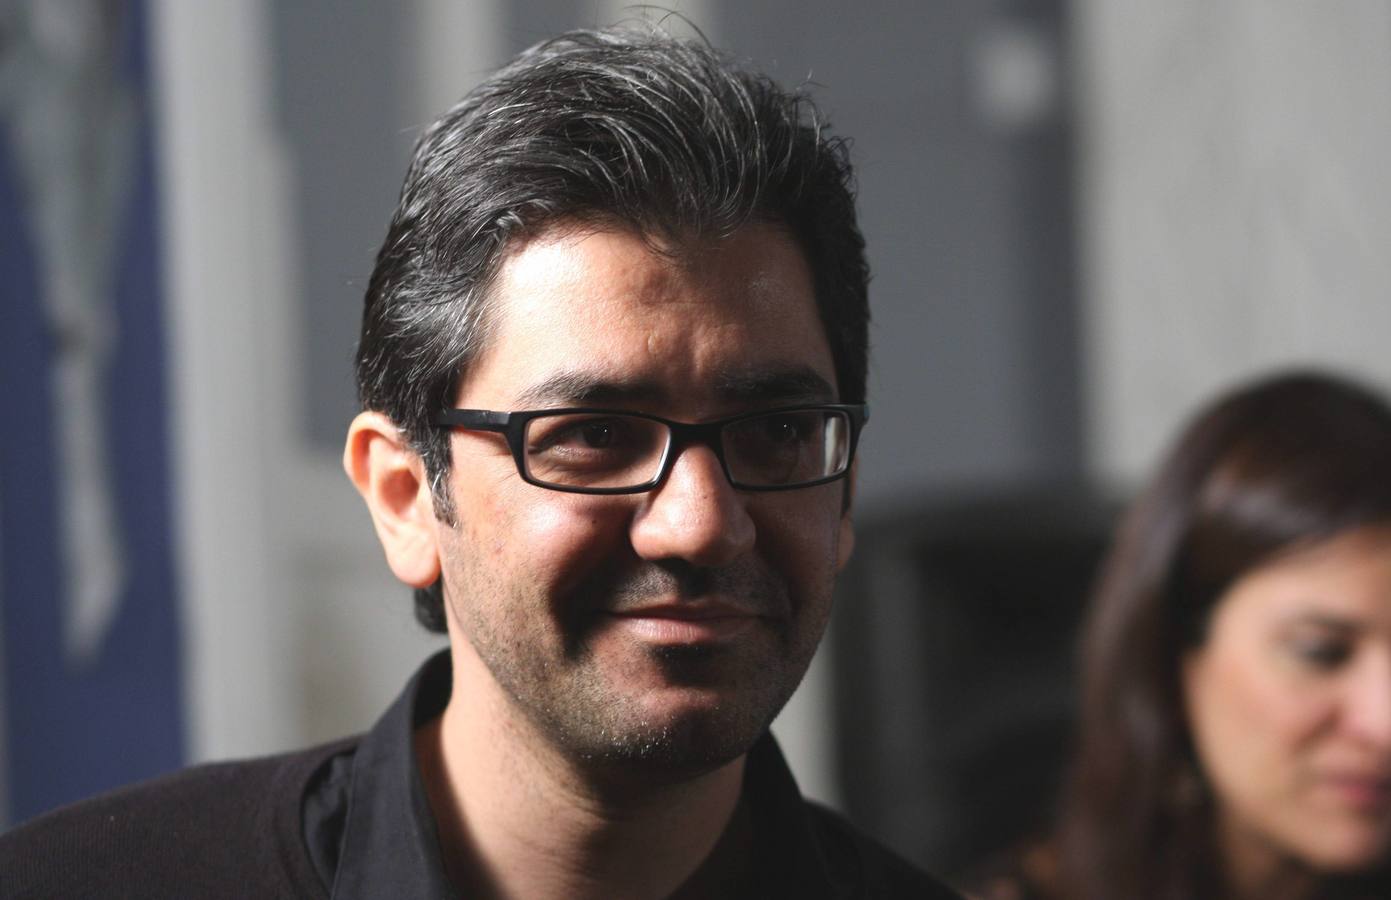 نیما جاویدی، نویسنده و کارگردان سینما و تلویزیون - عکس جشنواره